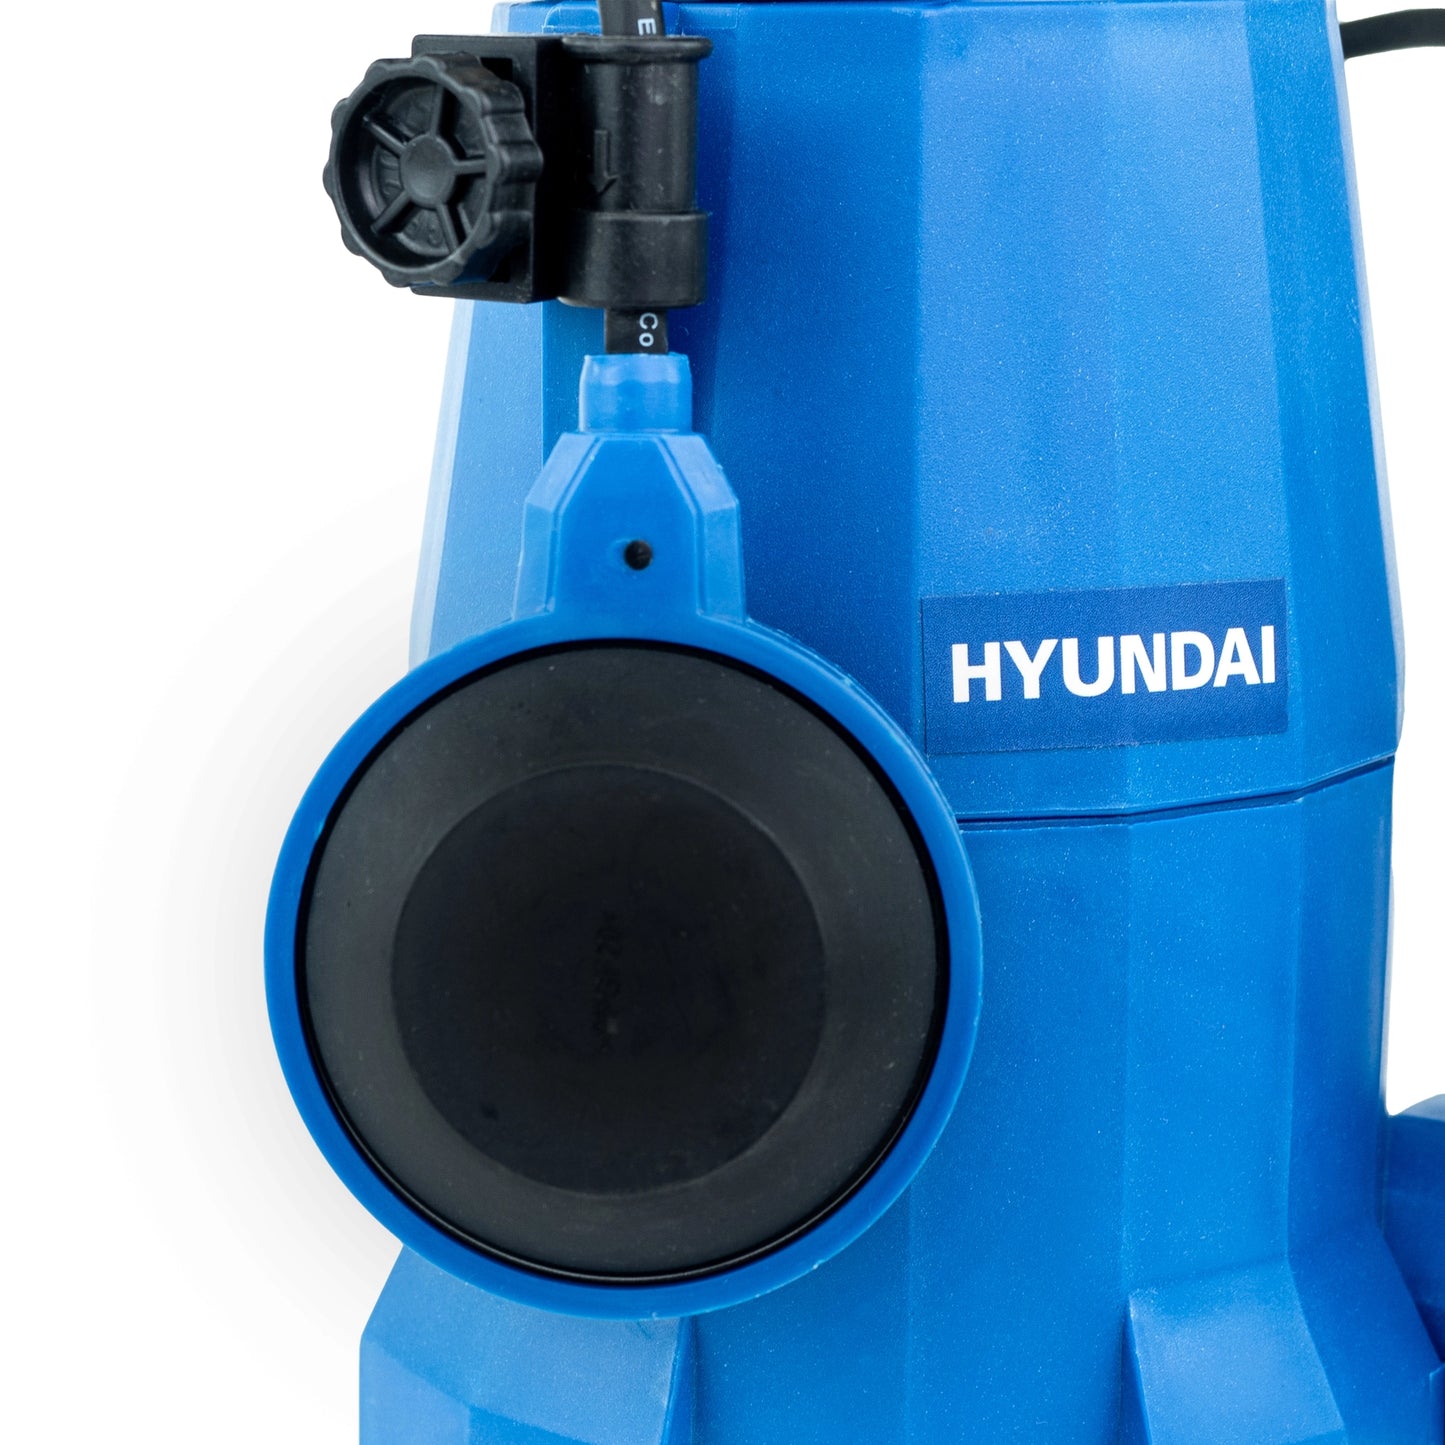 Hyundai HYSP250CW Electric Clean Water Submersible Pump